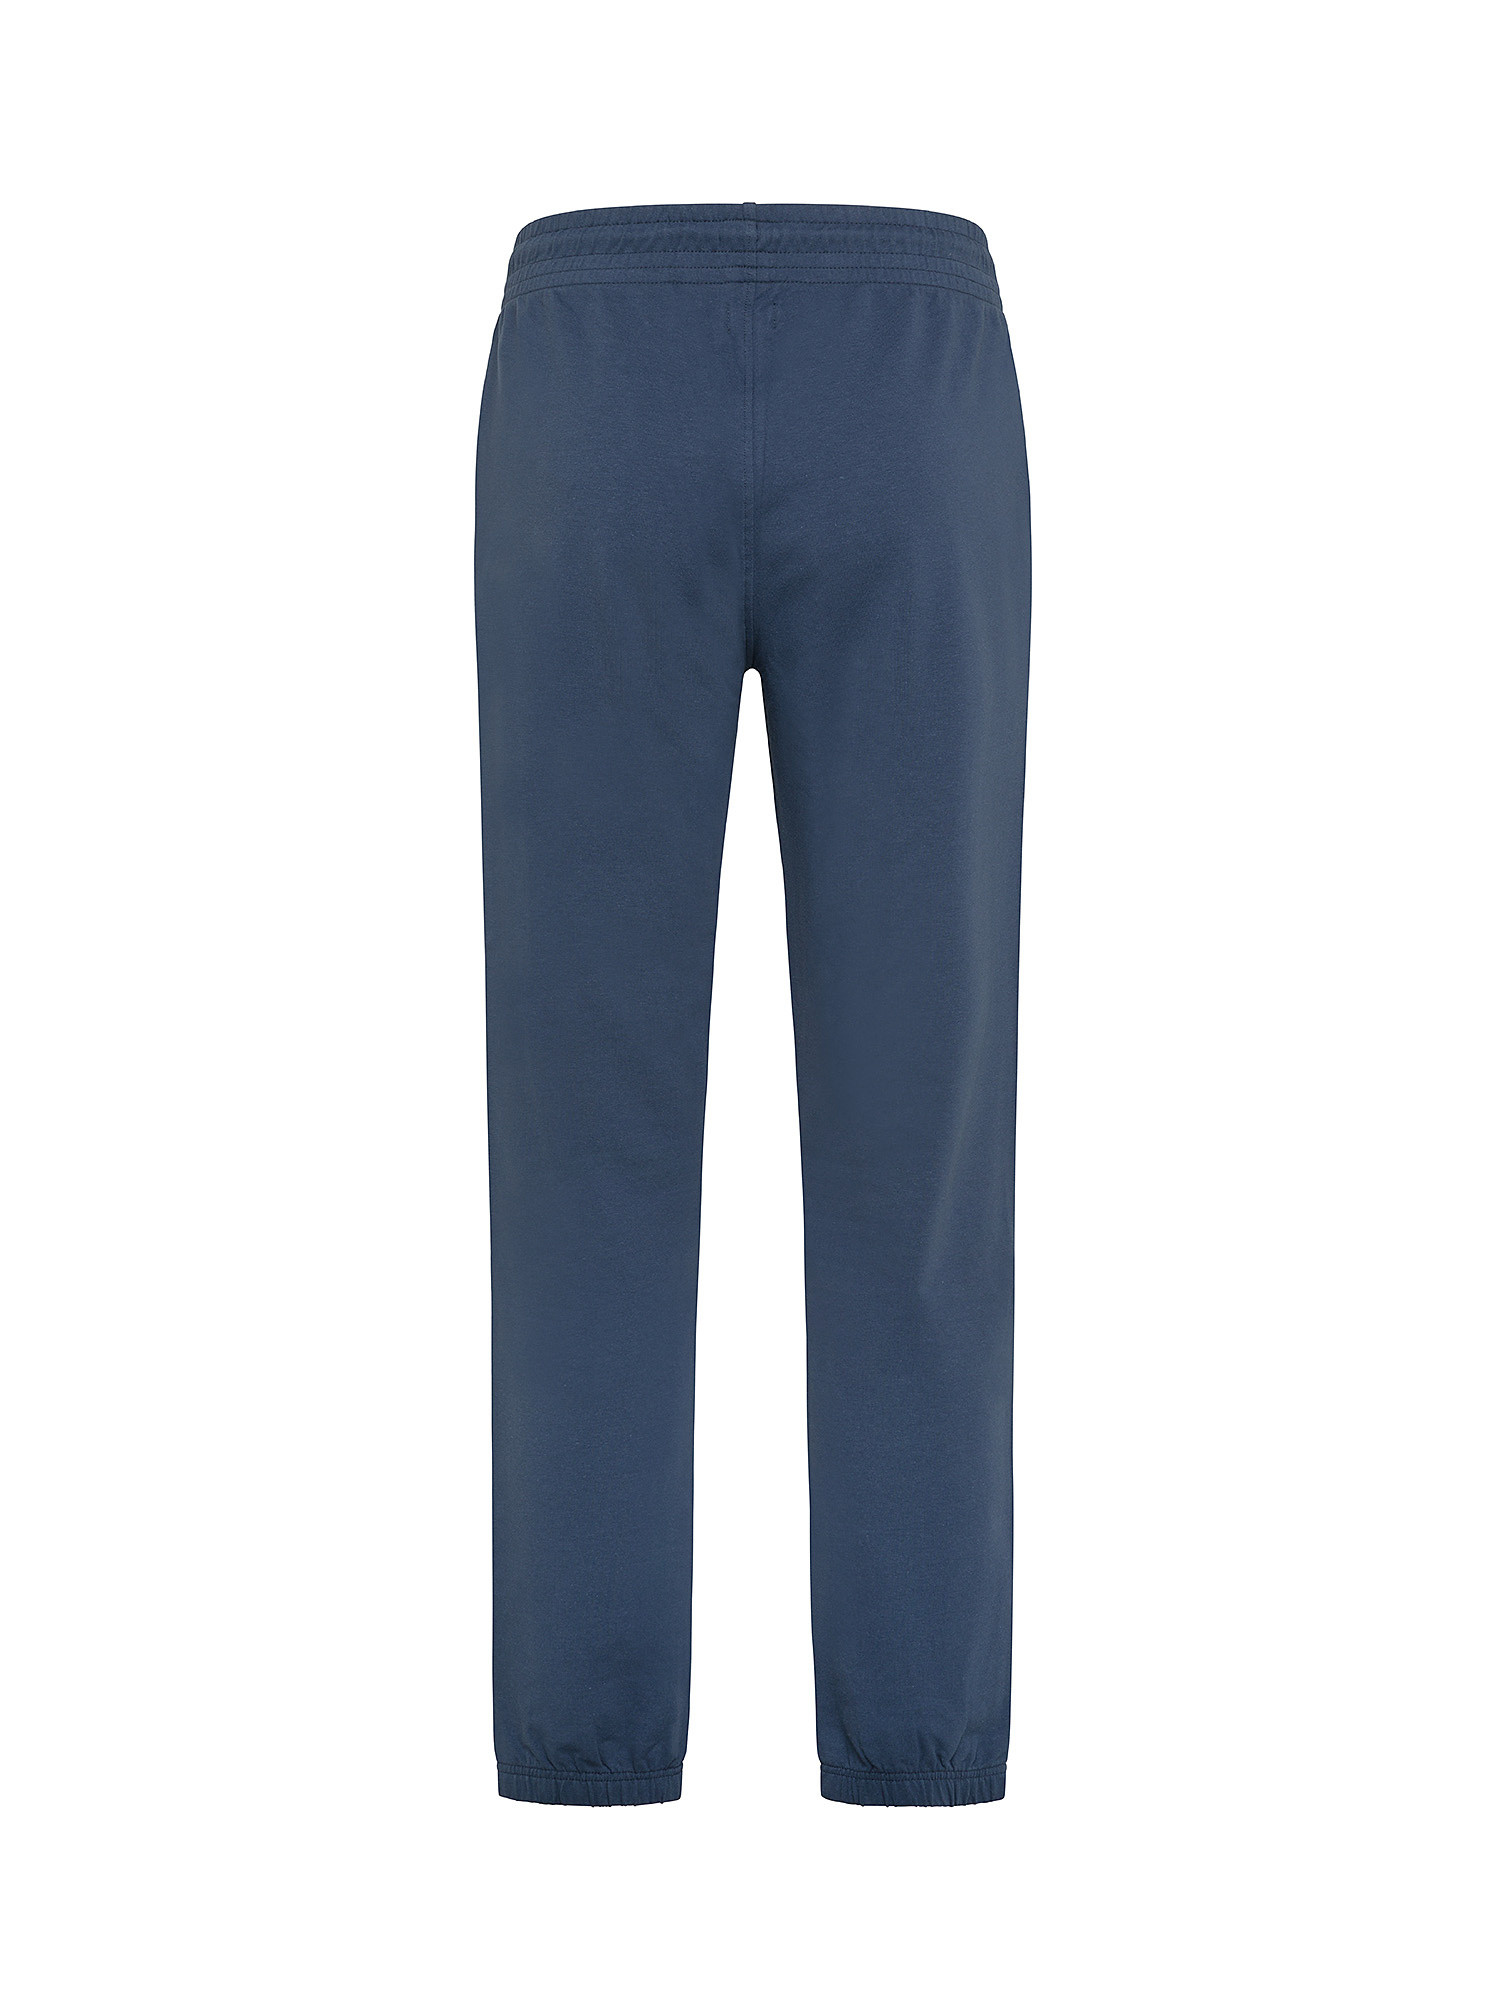 JCT - Pantaloni in cotone elasticizzato, Blu, large image number 1